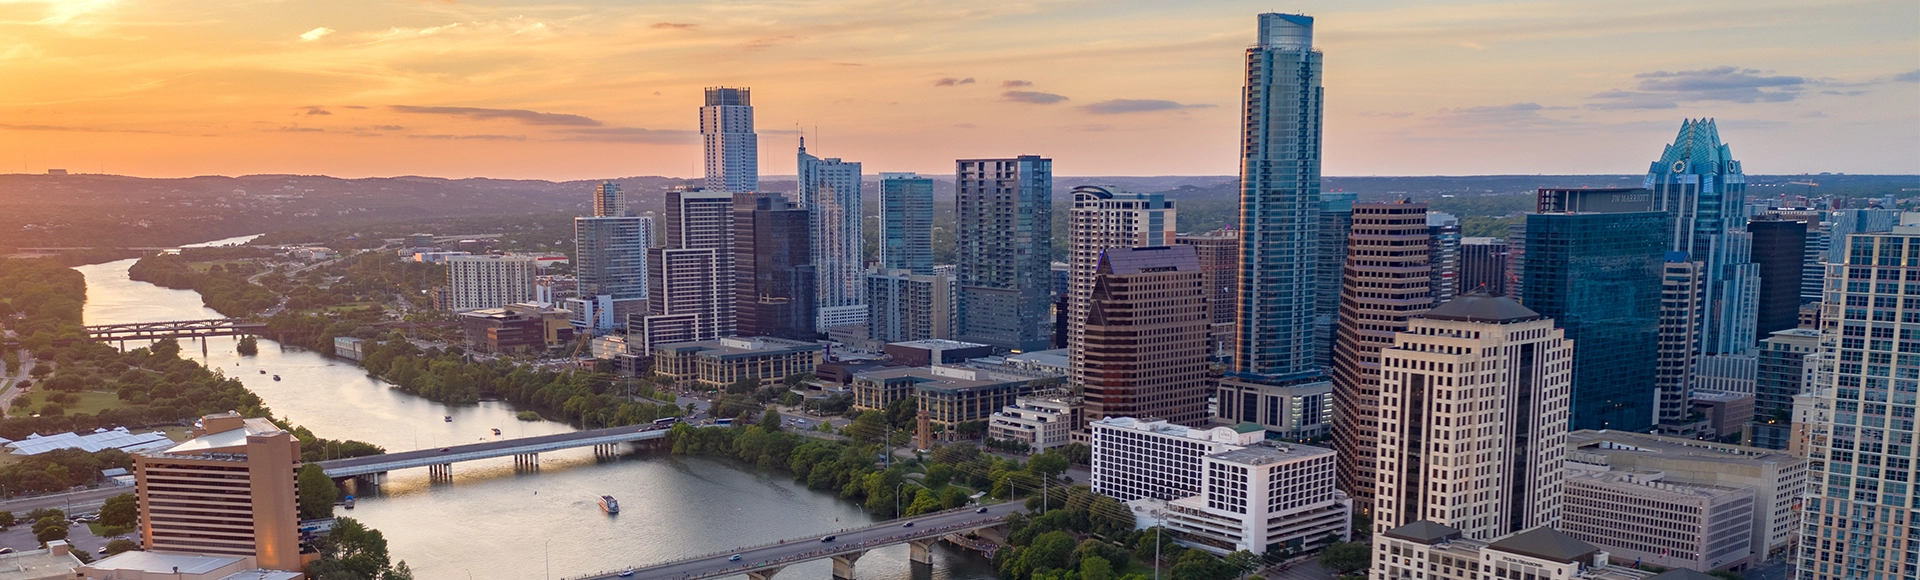 The city of Austin at dusk. 